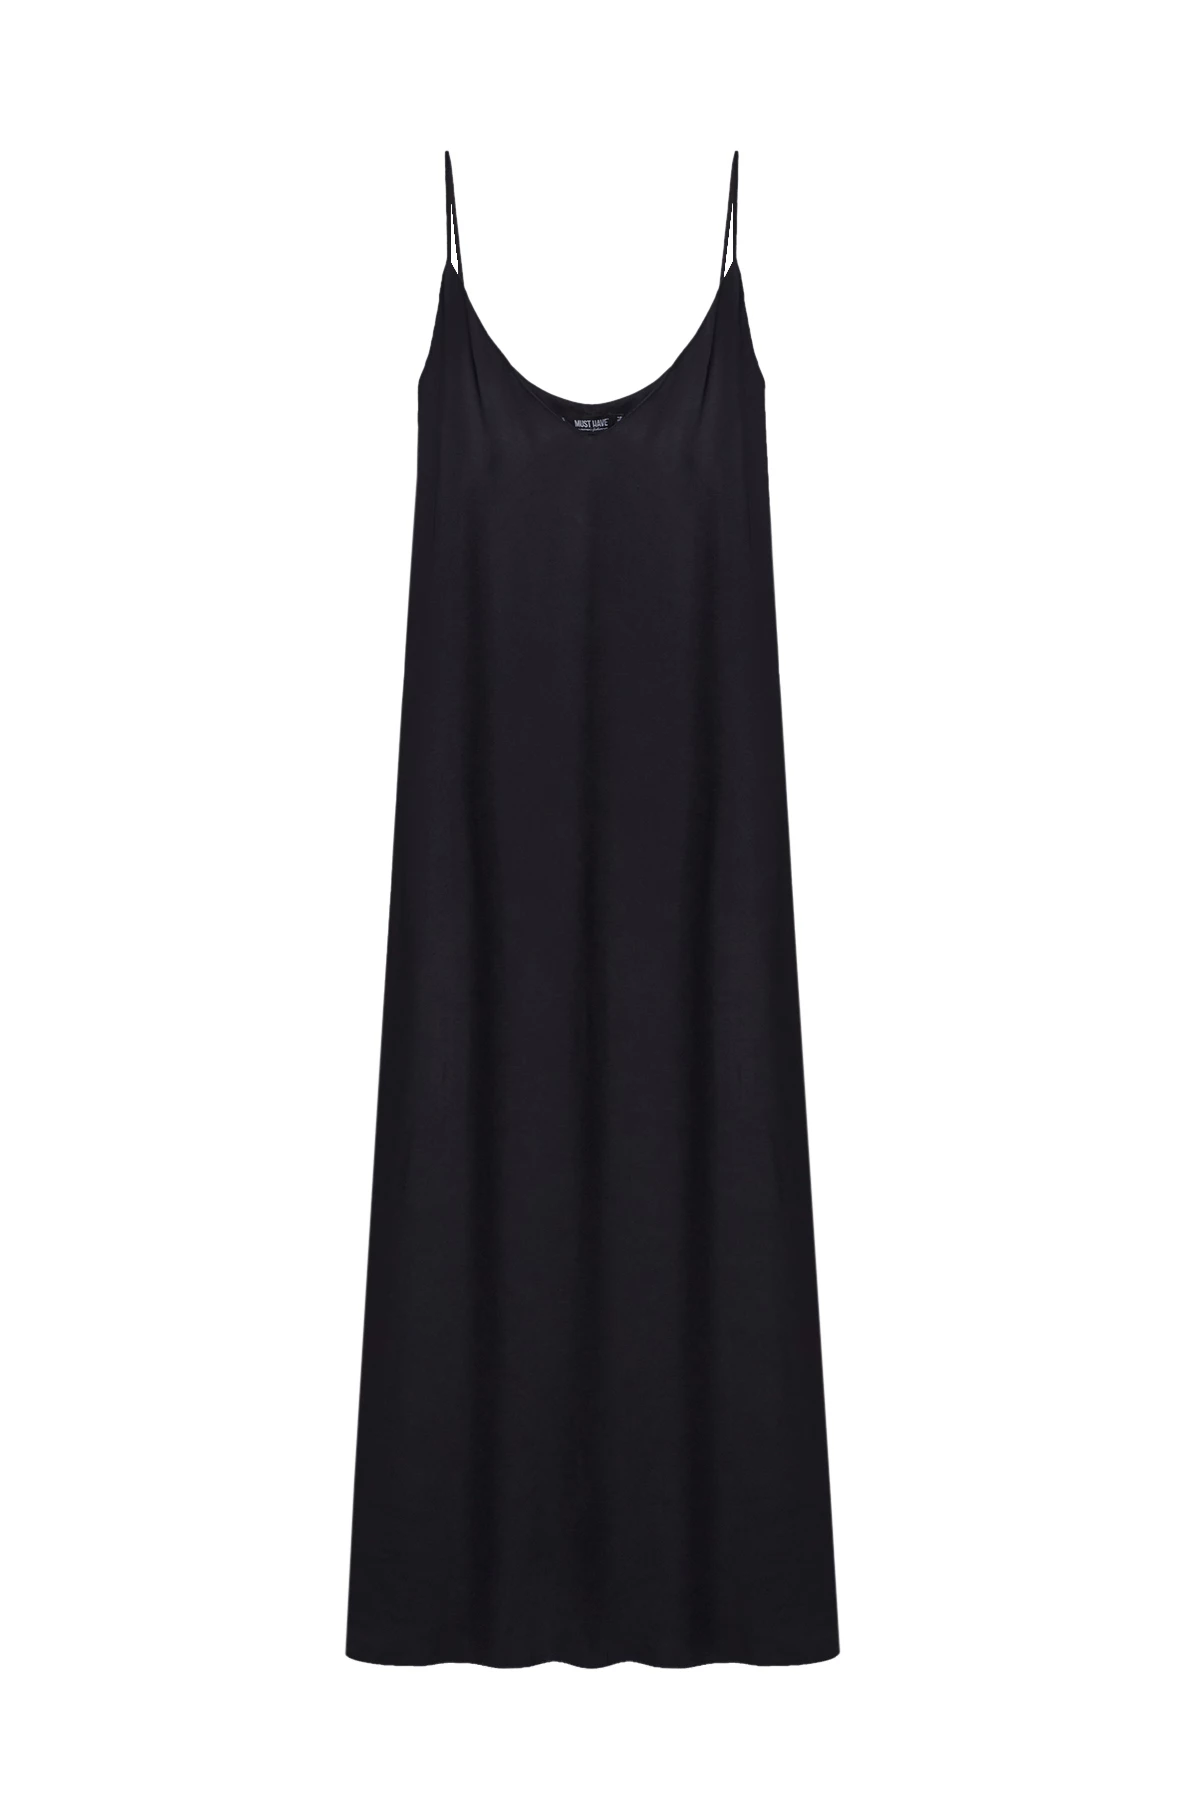 Black viscose maxi lenght slip dress, photo 6